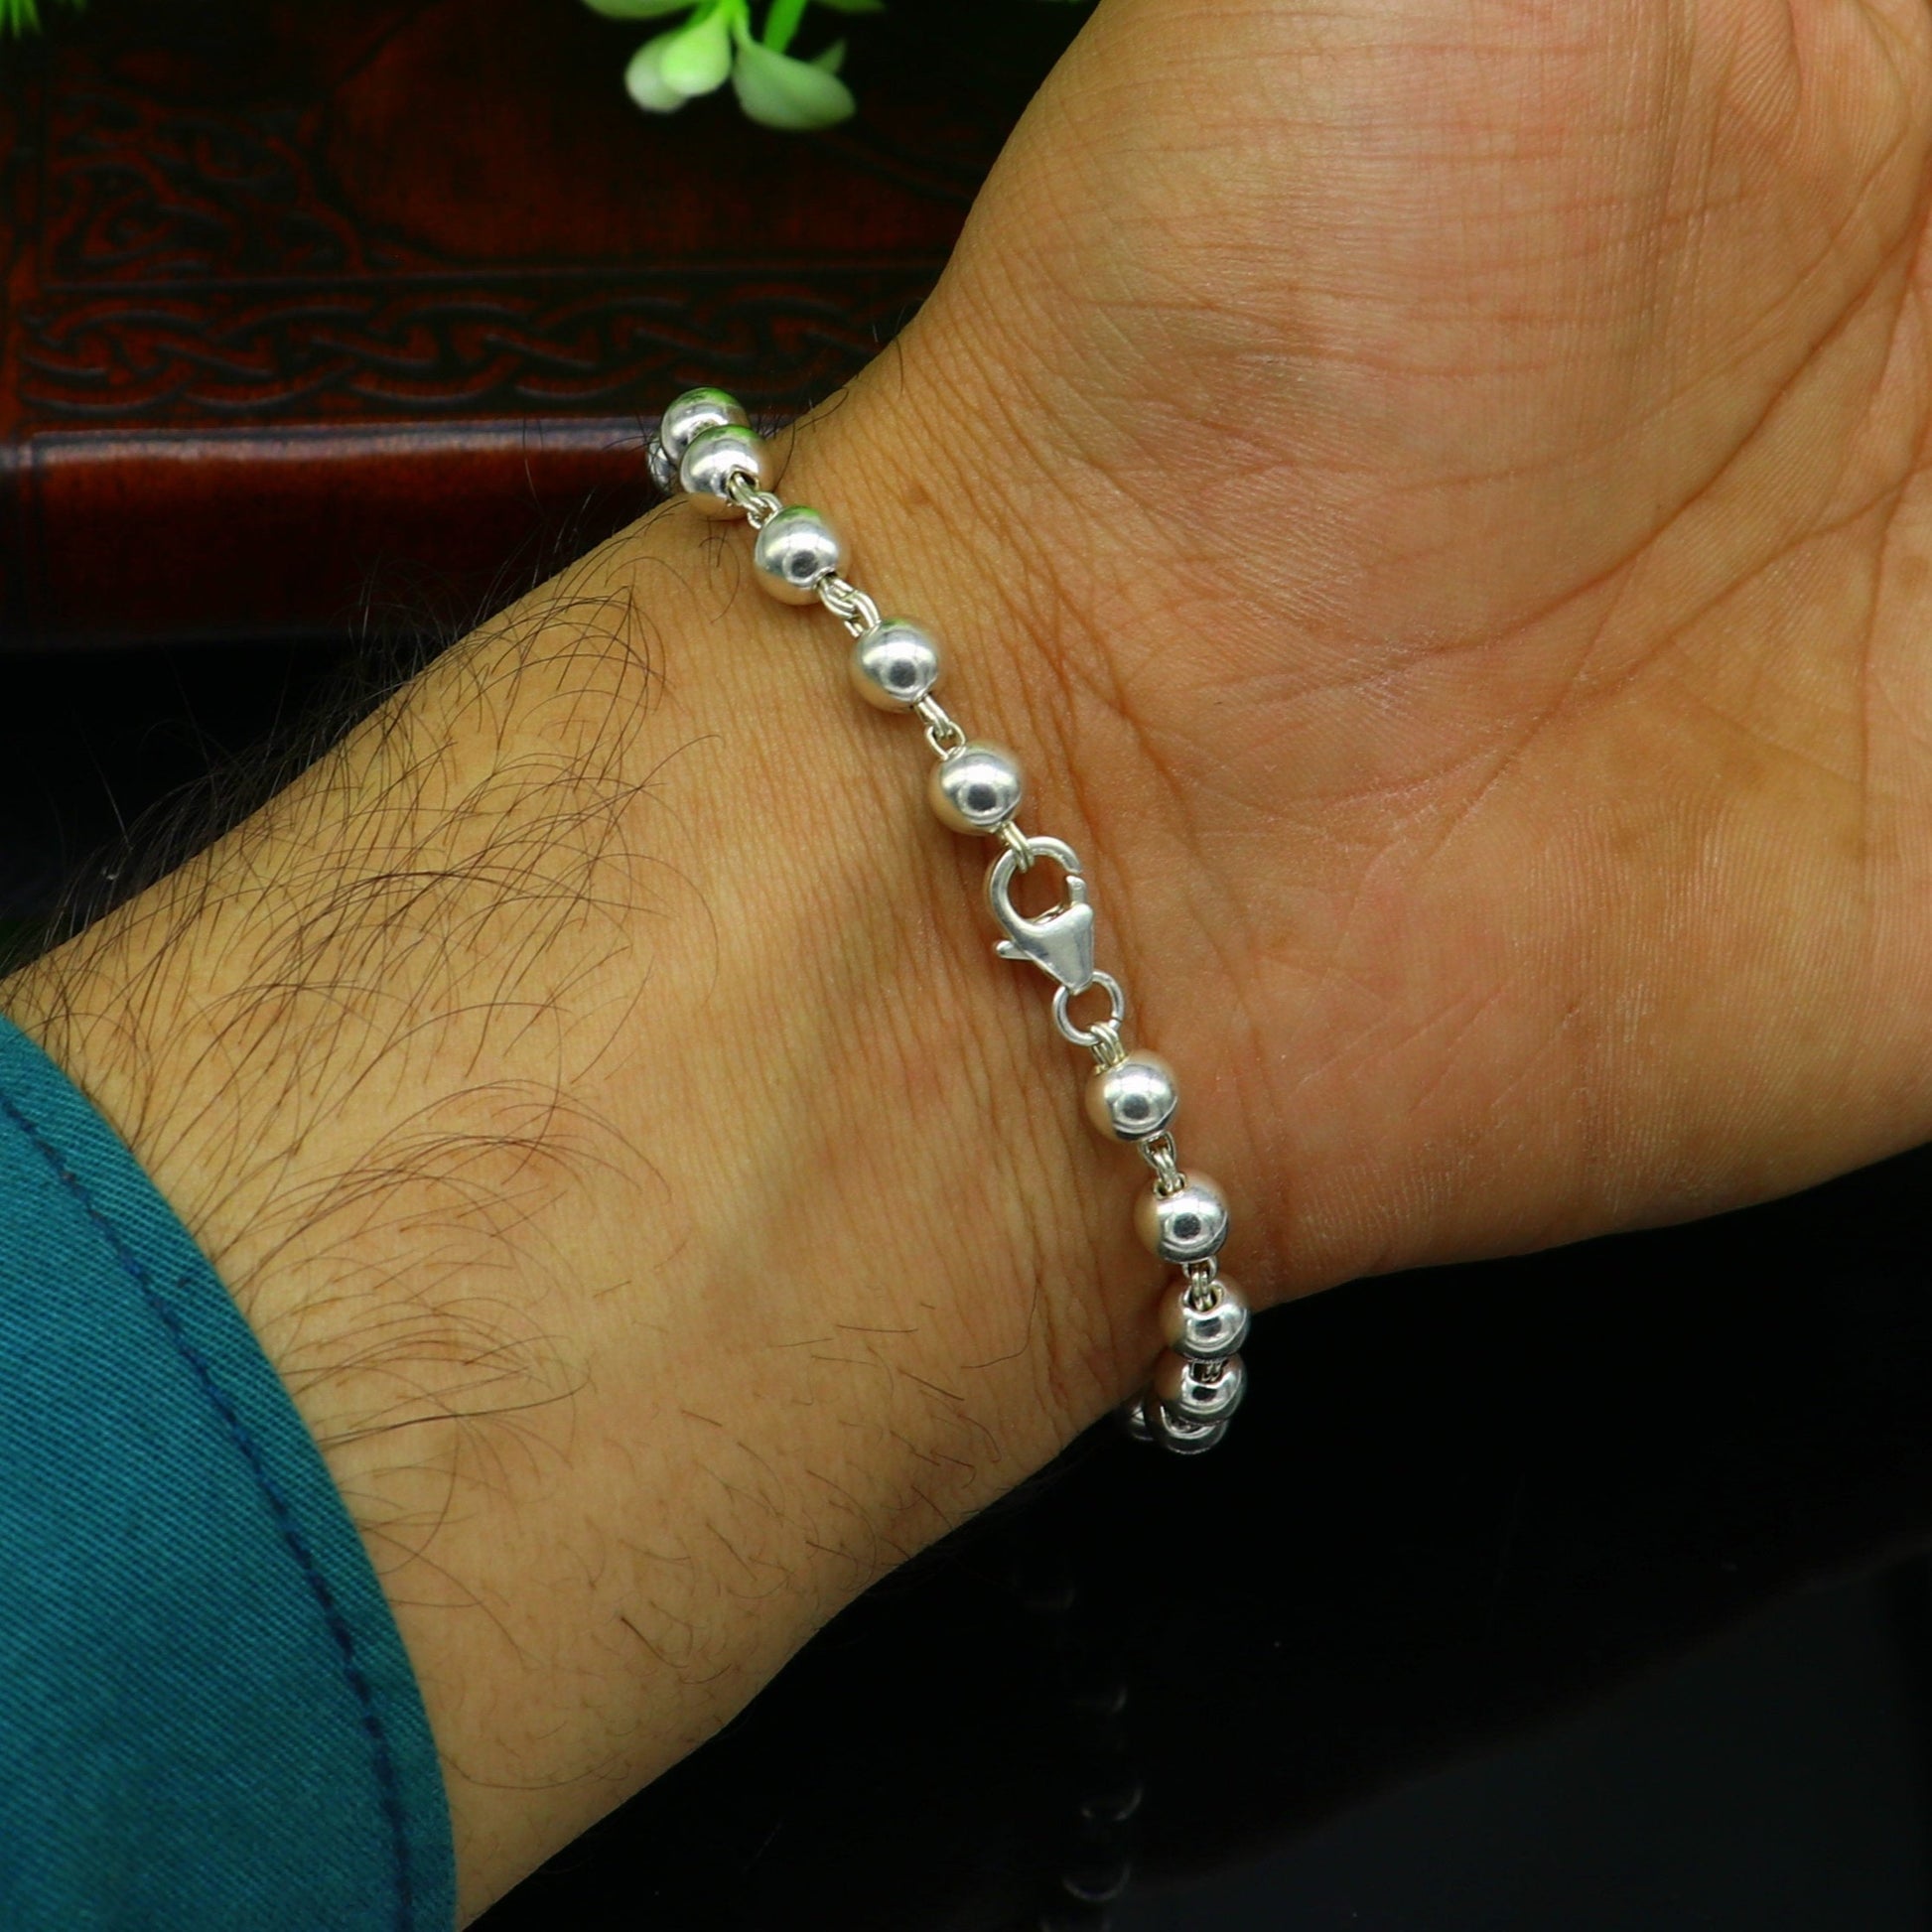 All sizes 925 sterling silver handmade 5.5 mm round beads balls unisex bracelet, fabulous customized 8 inches long beaded bracelet stylish gift sbr211 - TRIBAL ORNAMENTS